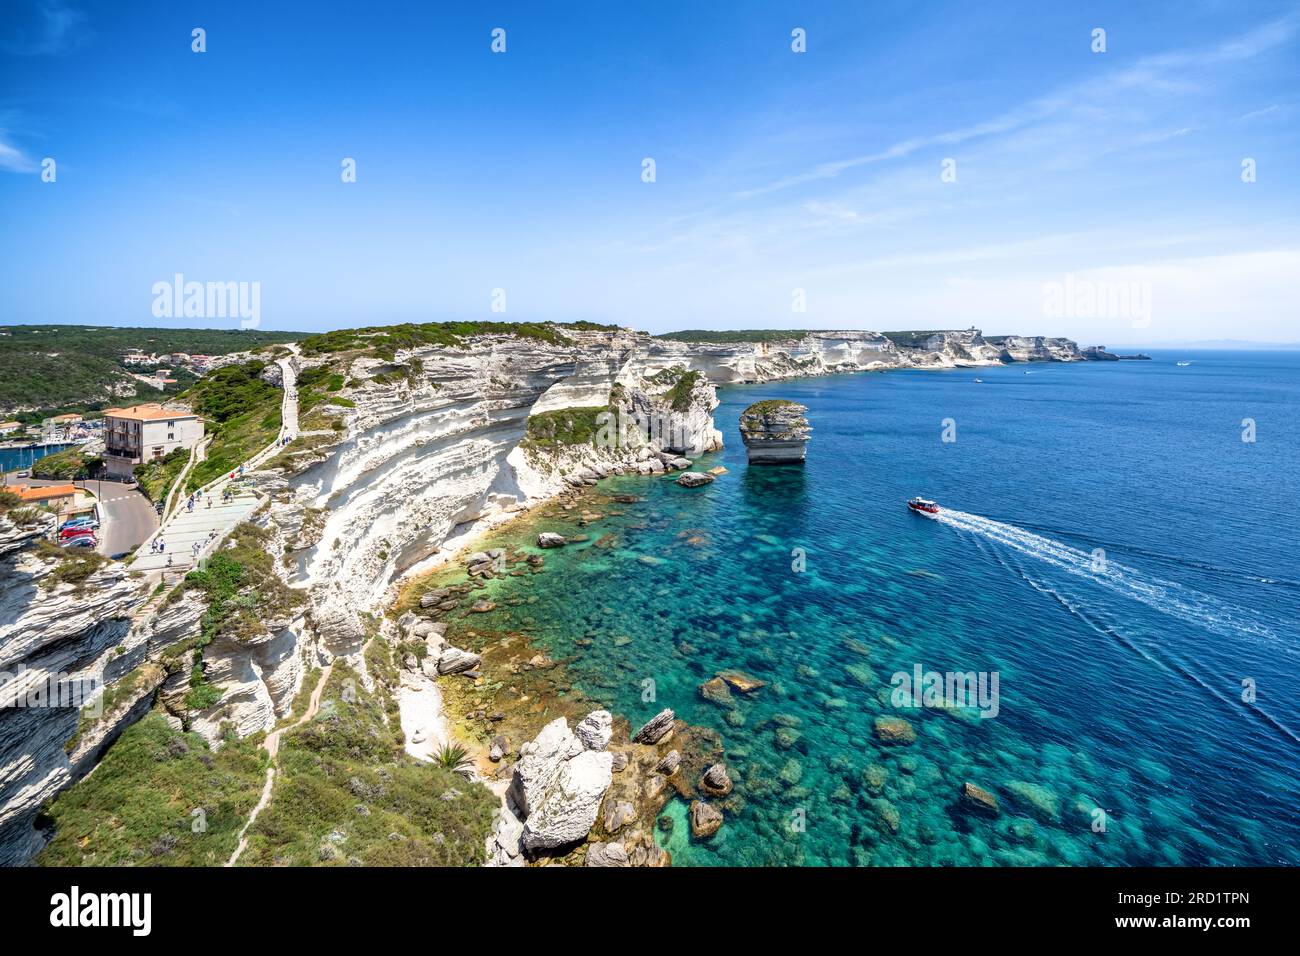 At Bonifacio, Corsica island, France Stock Photo